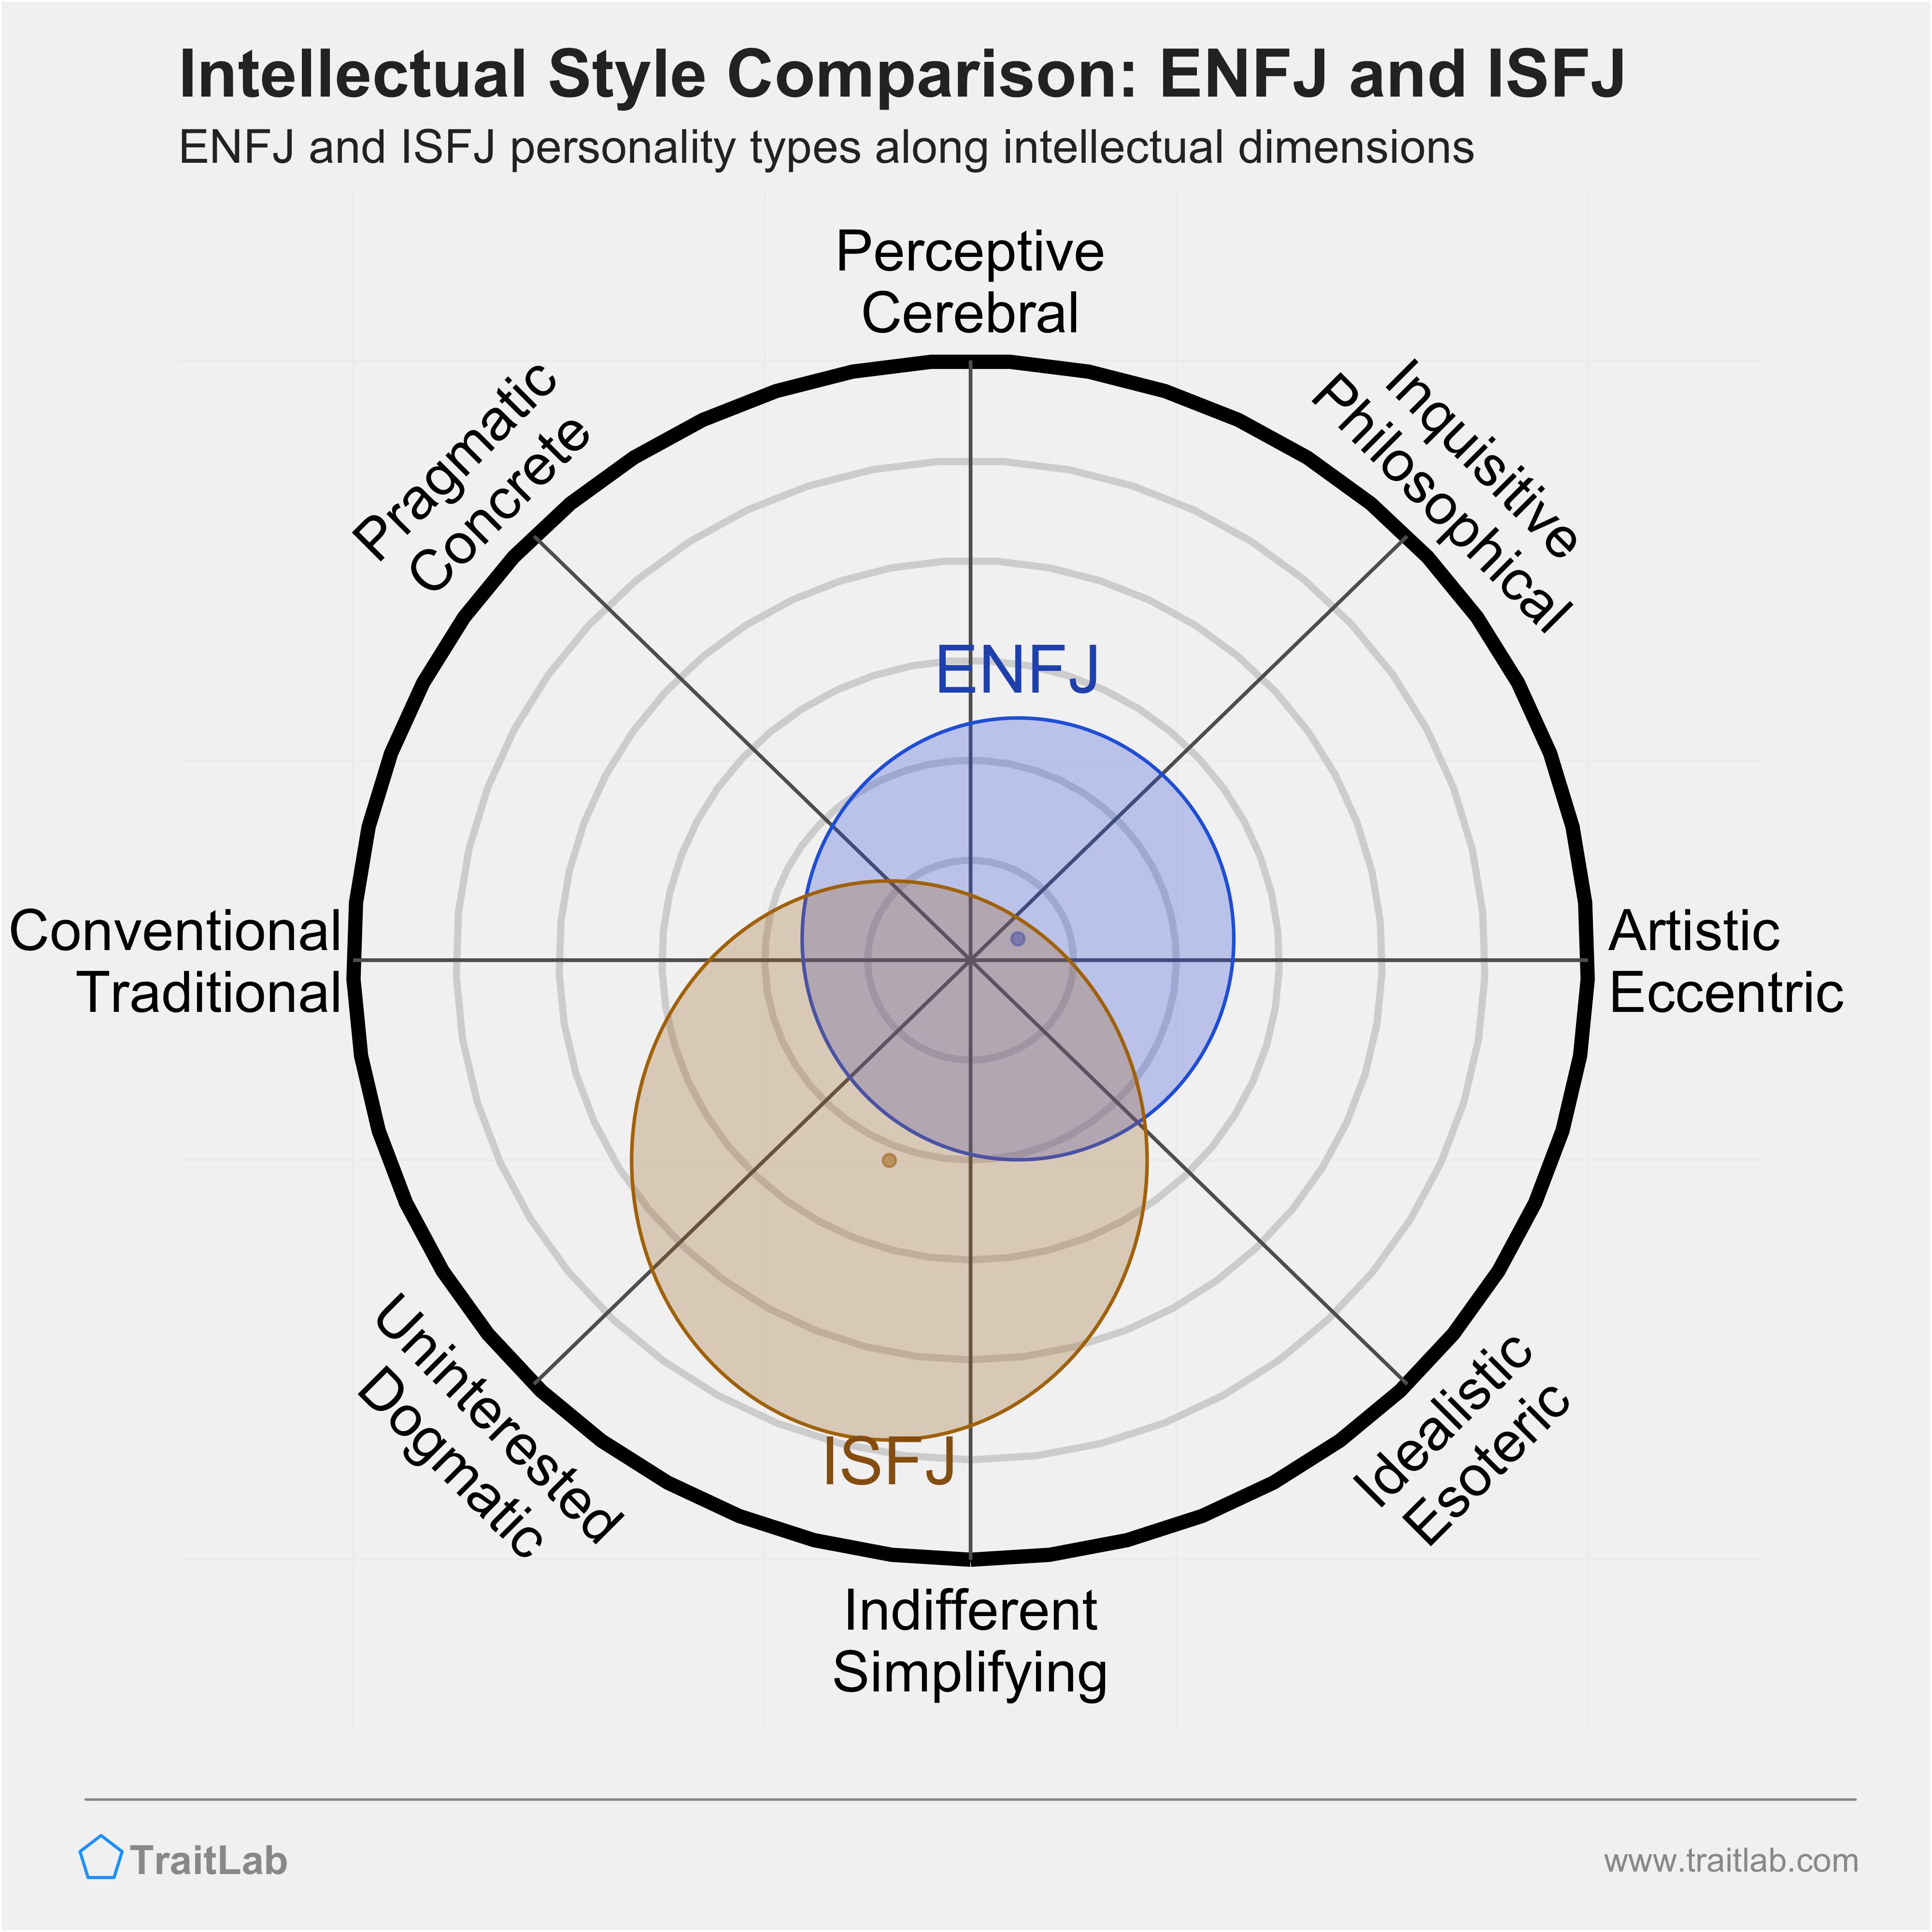 ENFJ and ISFJ comparison across intellectual dimensions